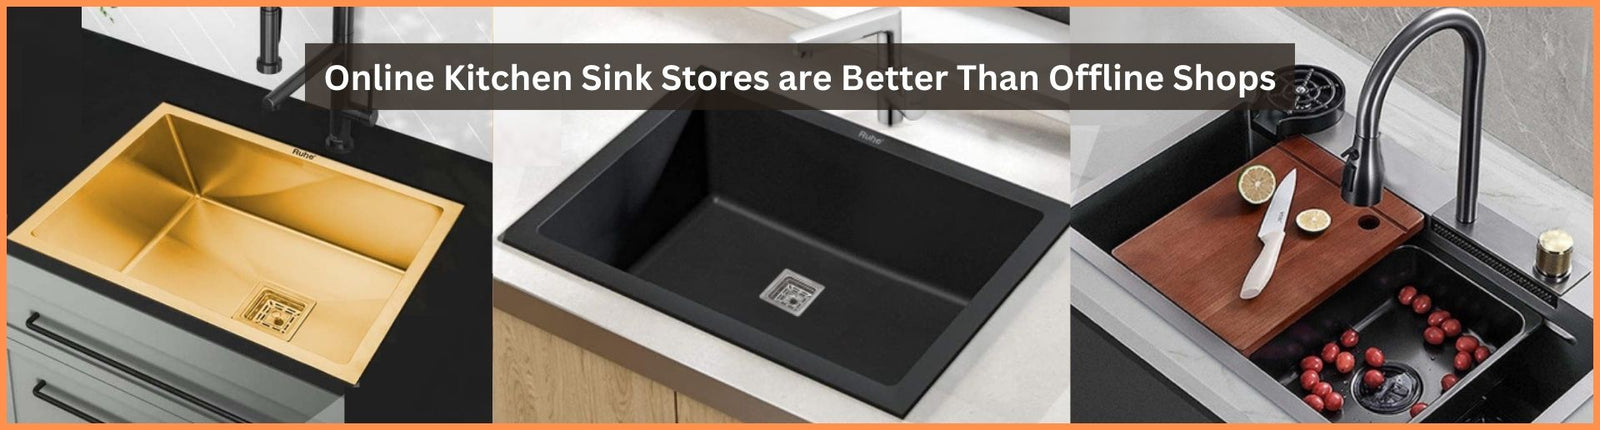 Online Kitchen Sink Stores are Better Than Offline Shops